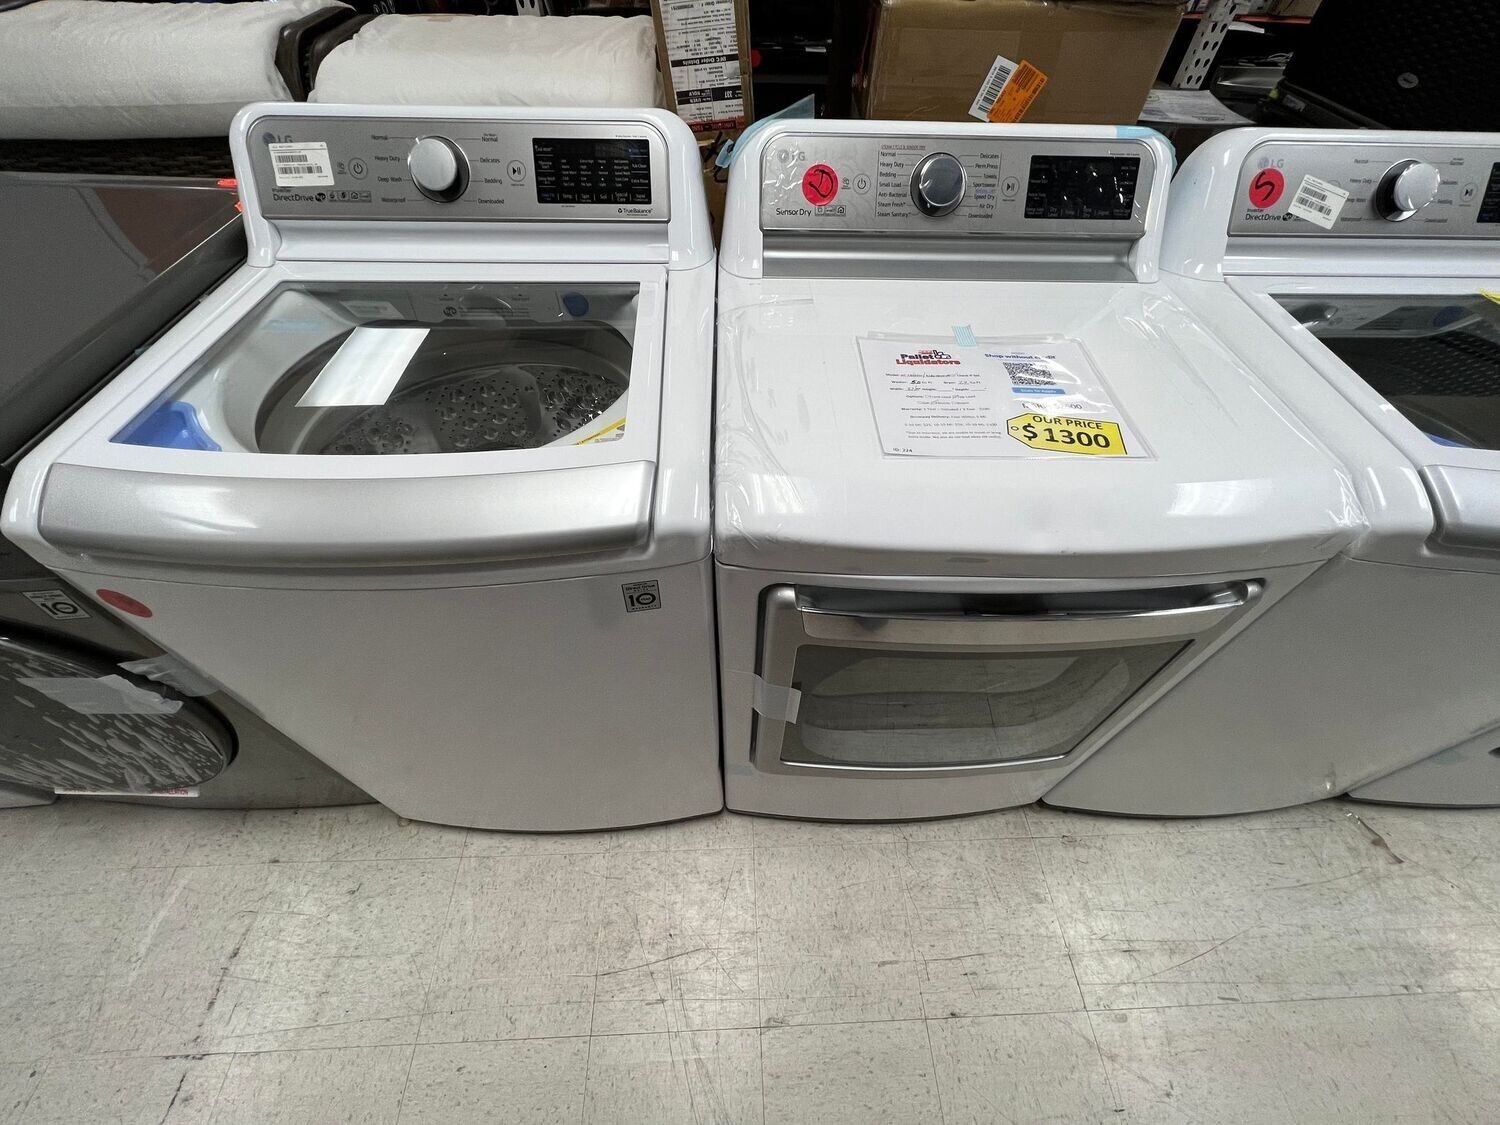 LG WT7305CW / DLEX7800WE Washer & Dryer